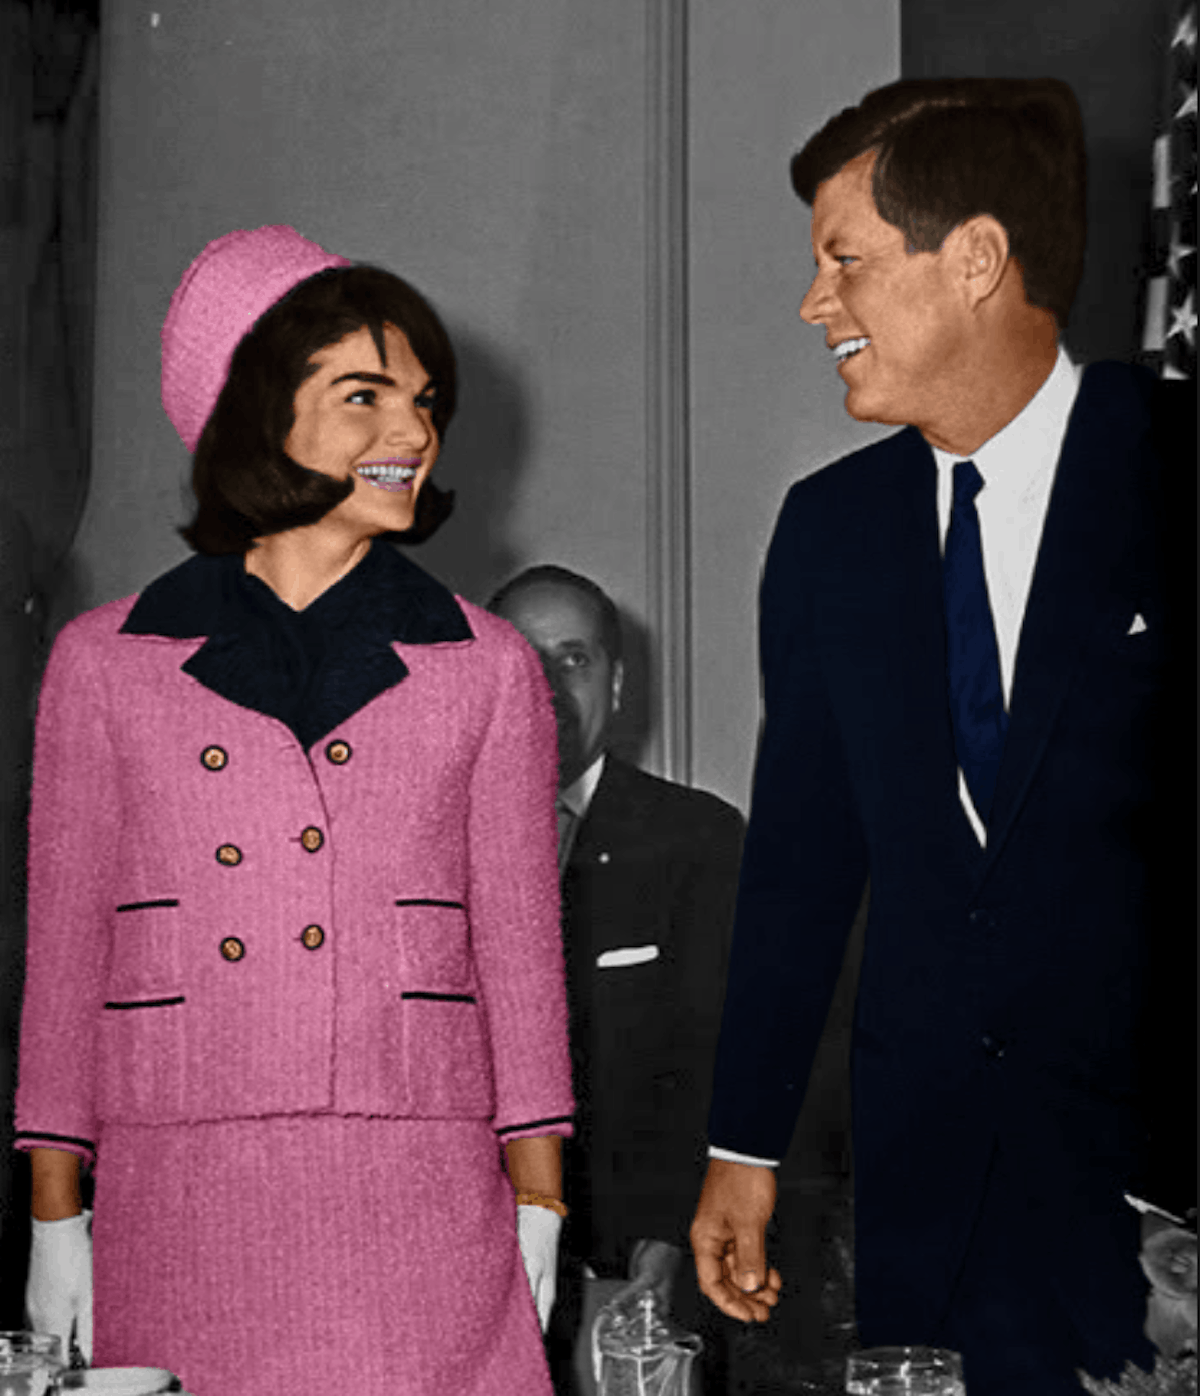 Mystique cloaks Jackie Kennedy's pink suit